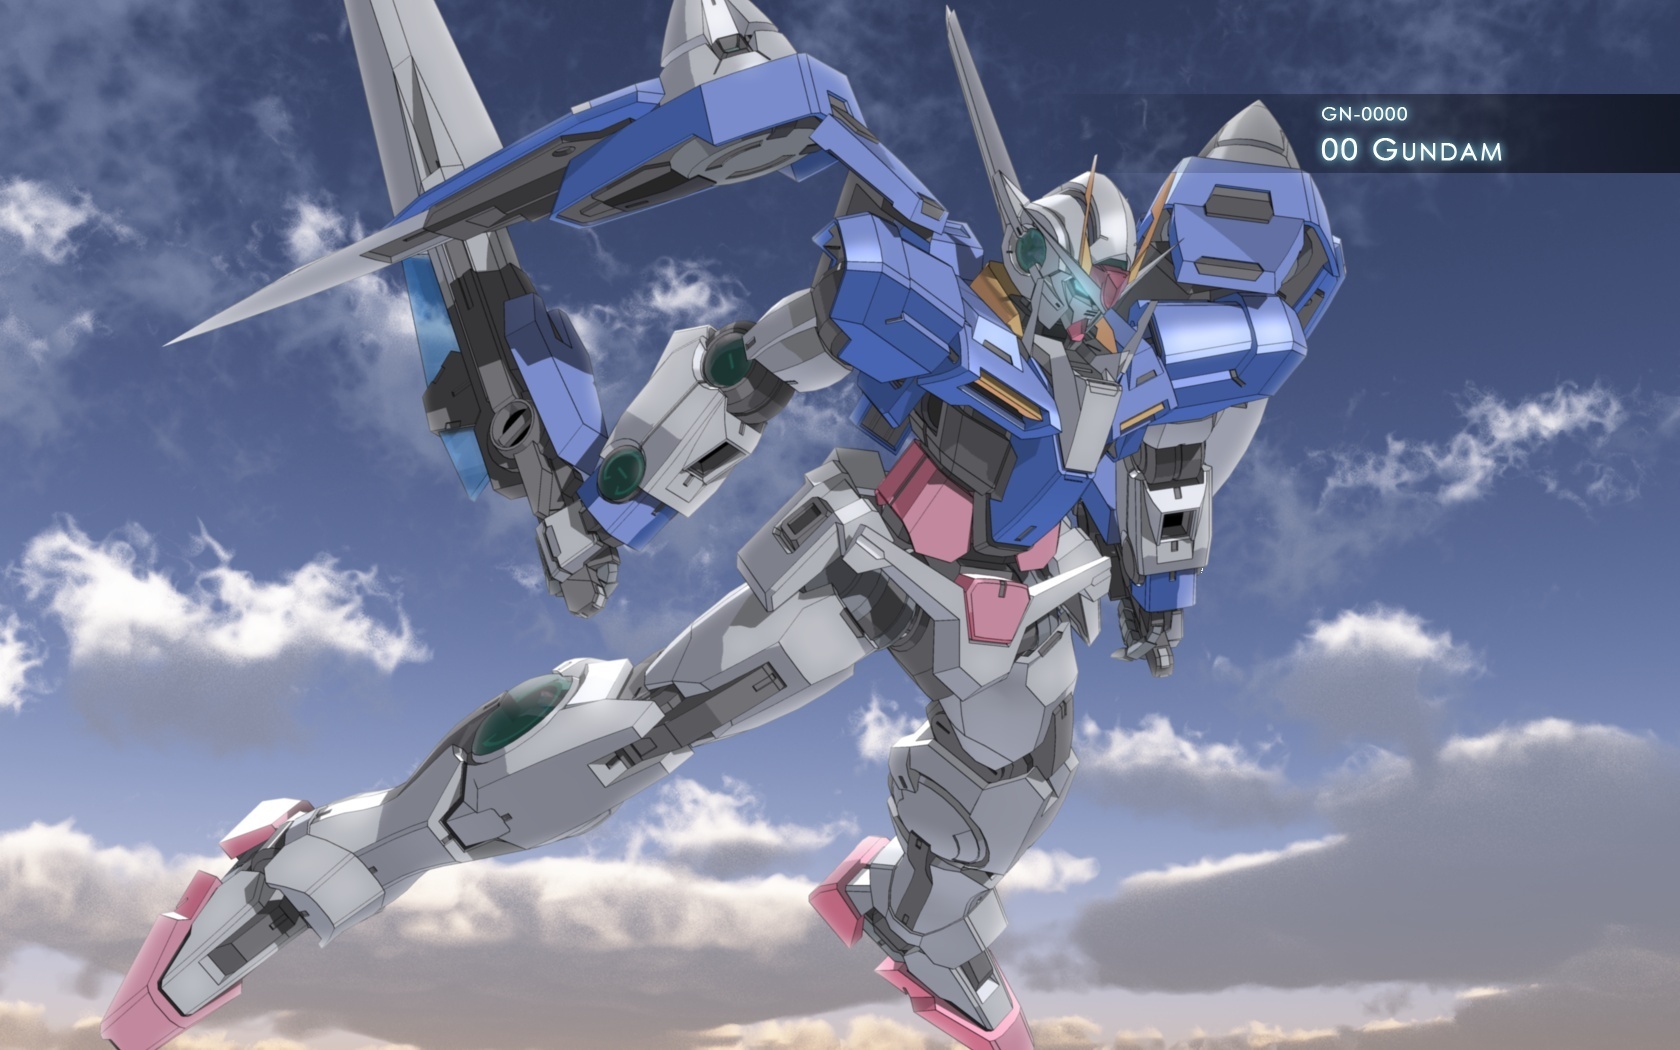 Mobile Suit Gundam Image HD Wallpaper And